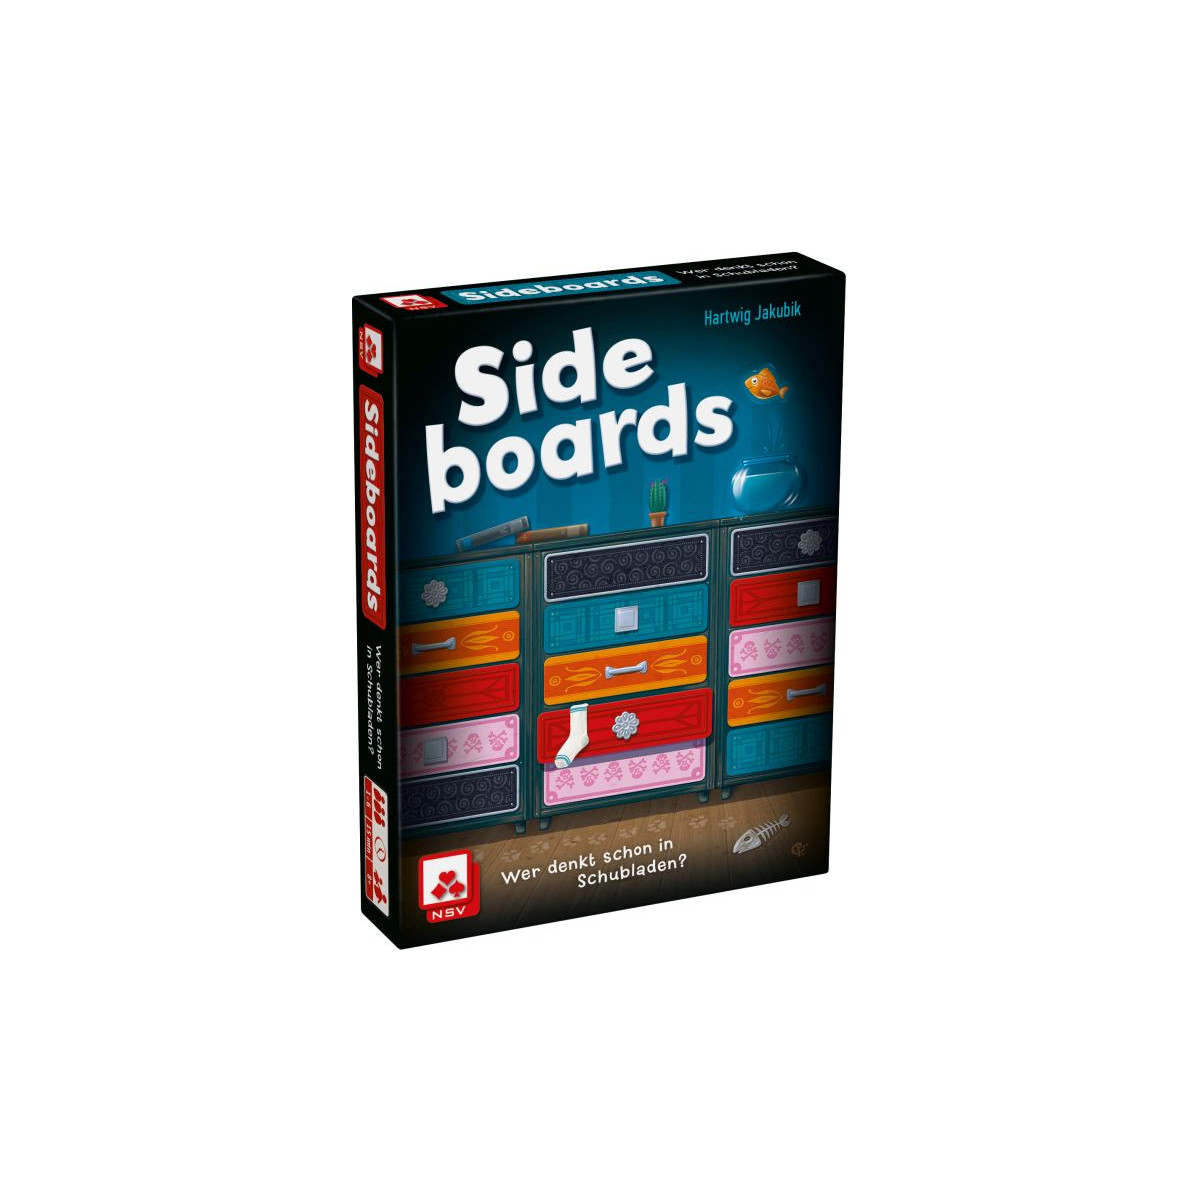 Sideboards